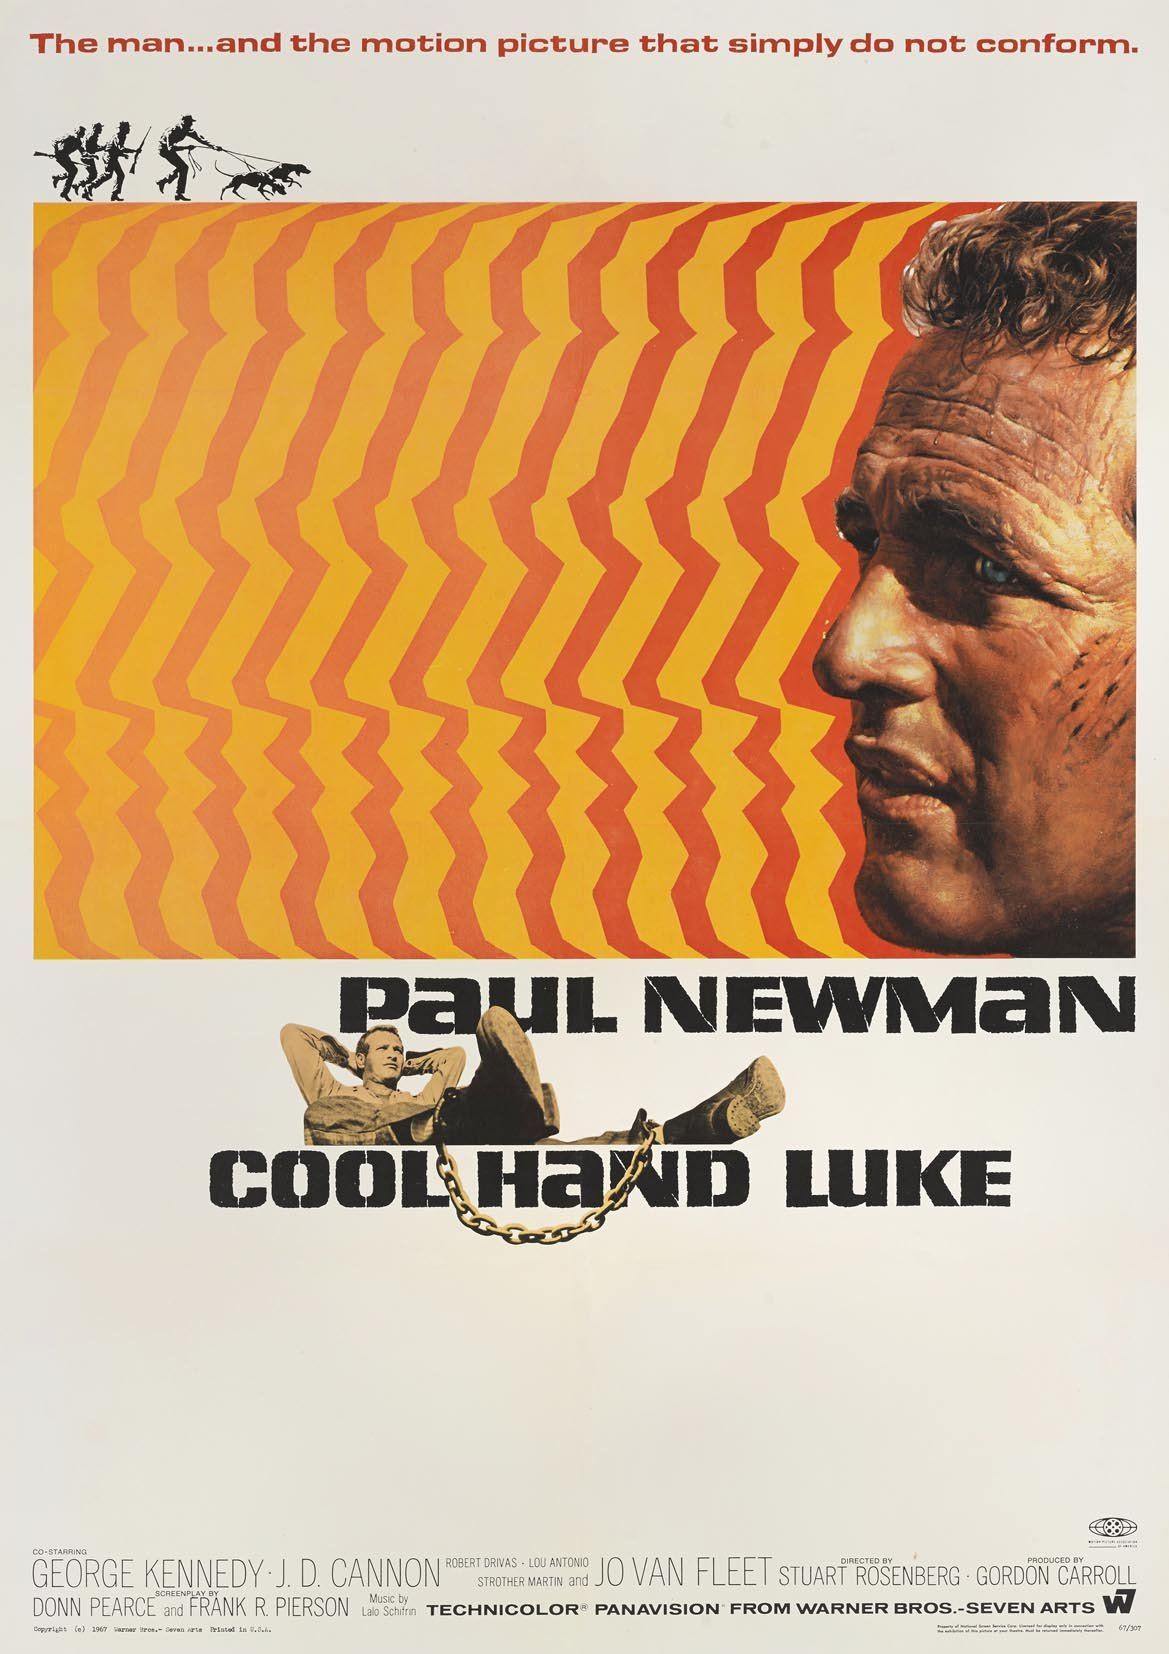 COOL HAND LUKE: Hollywood Movie Poster Art Reprint - Pimlico Prints